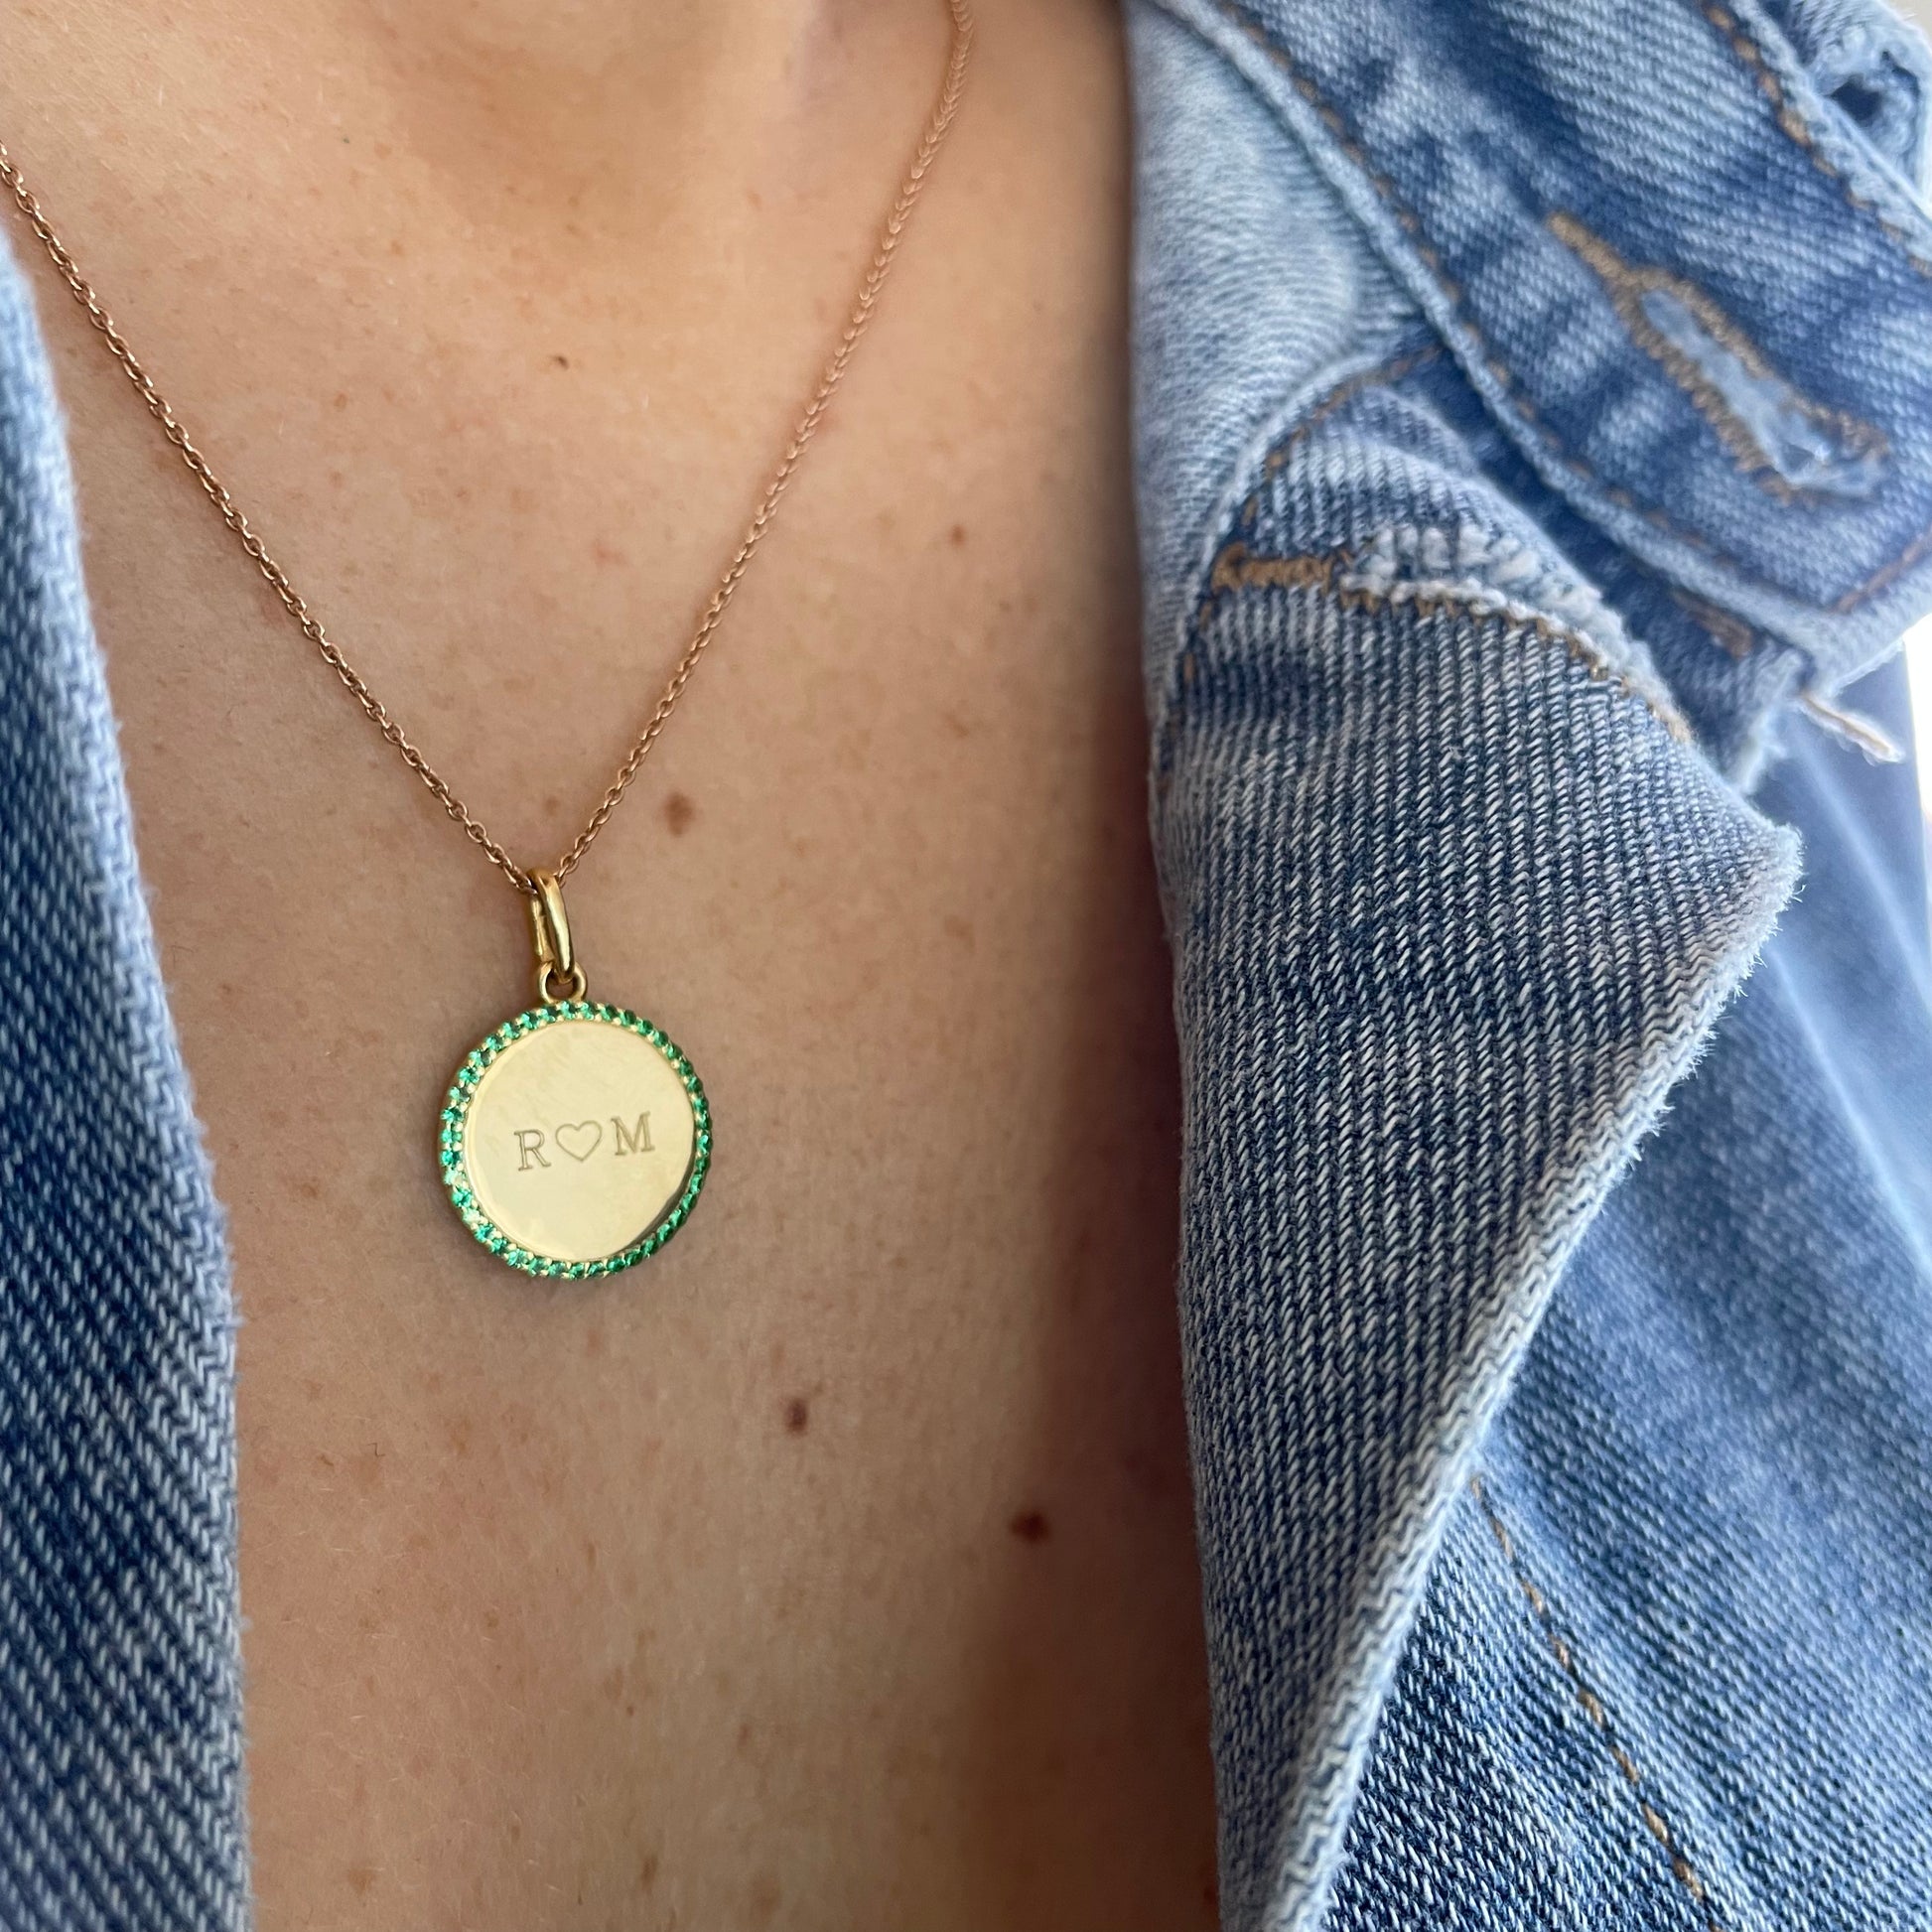 Personalised Diamond Medallion Pendant - Green Emeralds - - Jewelry - Goldie Paris Jewelry - Moms Pavé Pendant